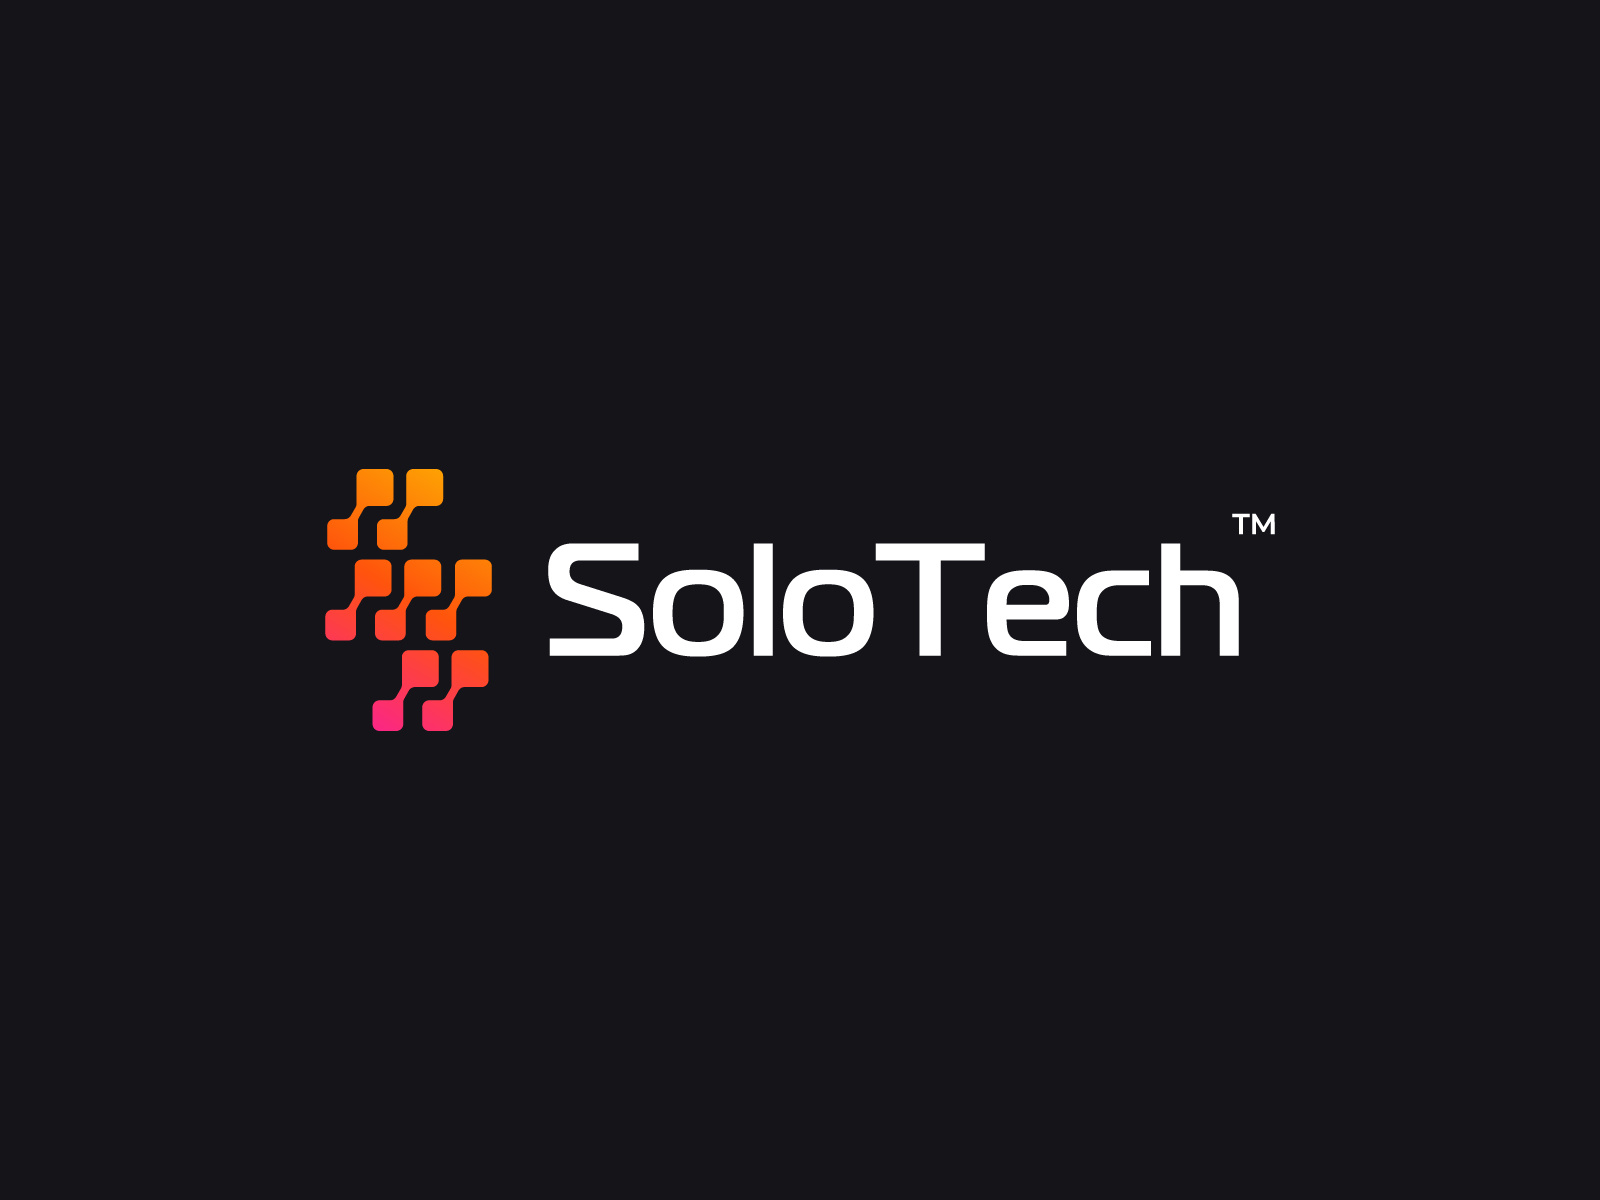 SoloTech - S Tech Logo - Technology Logo. by Rahid Rehman on Dribbble